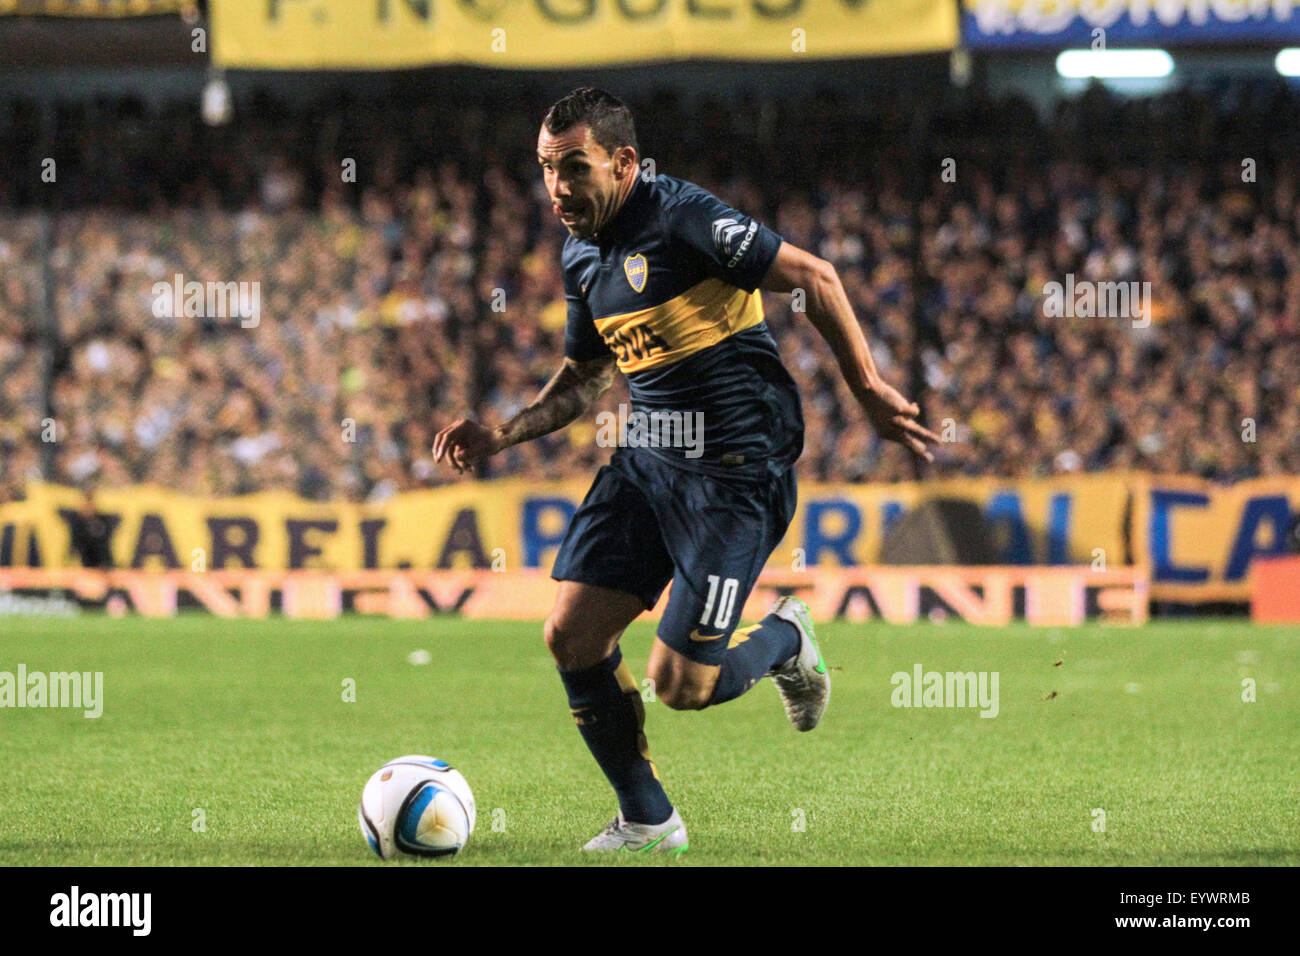 Buenos Aires, Argentina. 2nd August, 2015. Calleri of Boca during the game in La Bombonera Stadium. © Néstor J. Beremblum/Alamy Live News Stock Photo